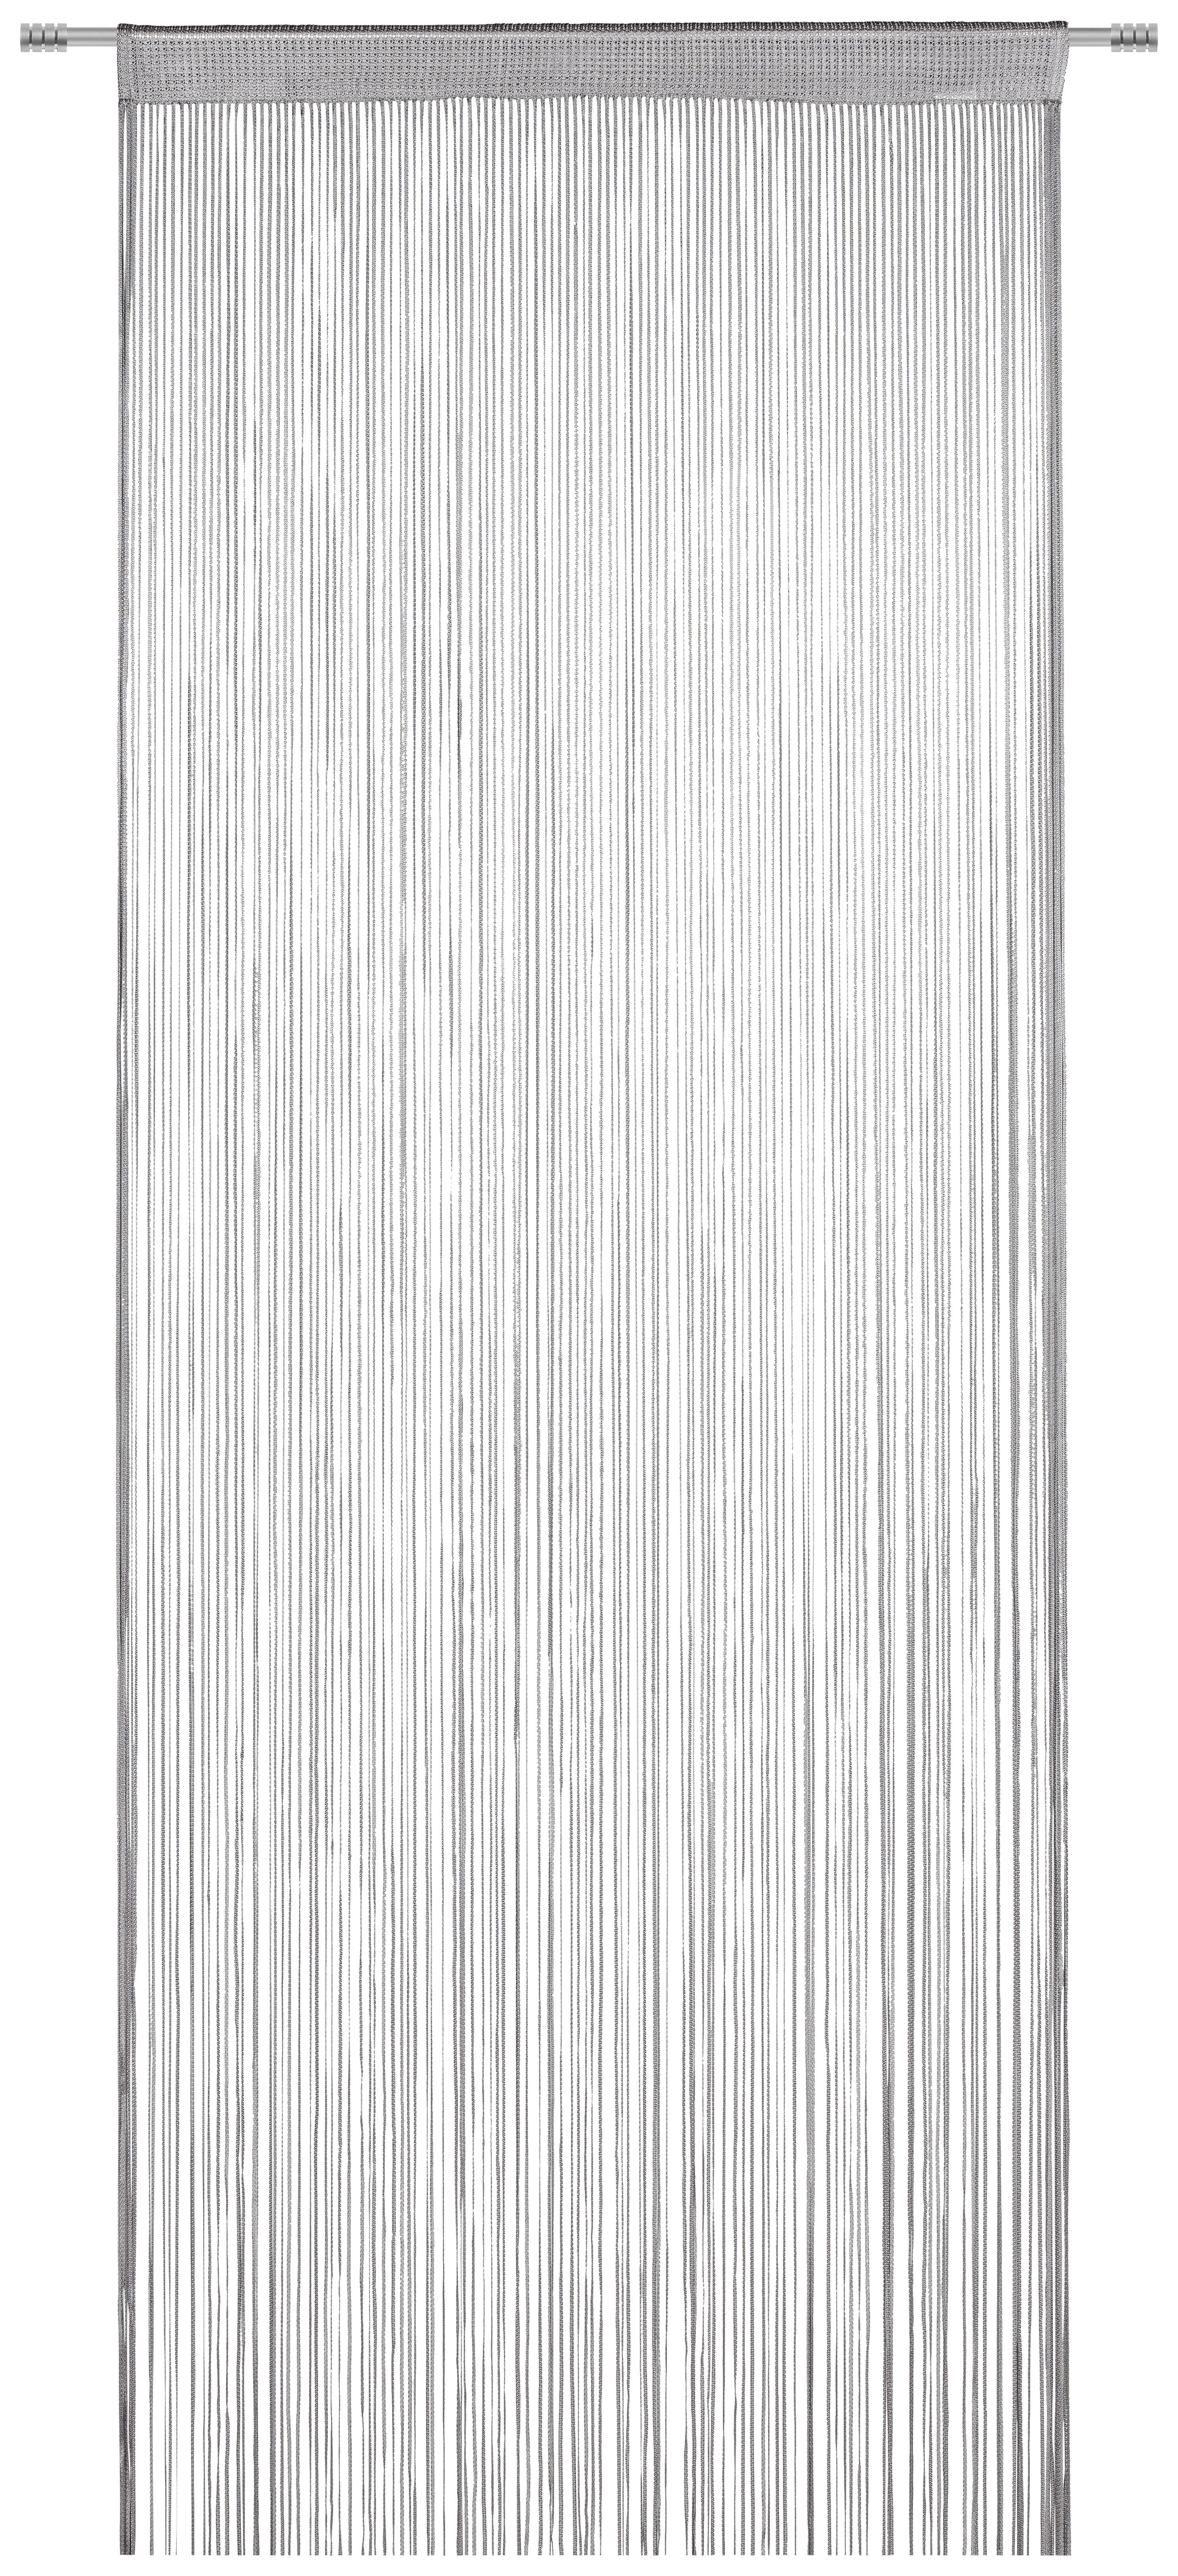 FADENVORHANG   Anthrazit    90/255 cm  - Anthrazit, Basics, Textil (90/255cm) - Dieter Knoll